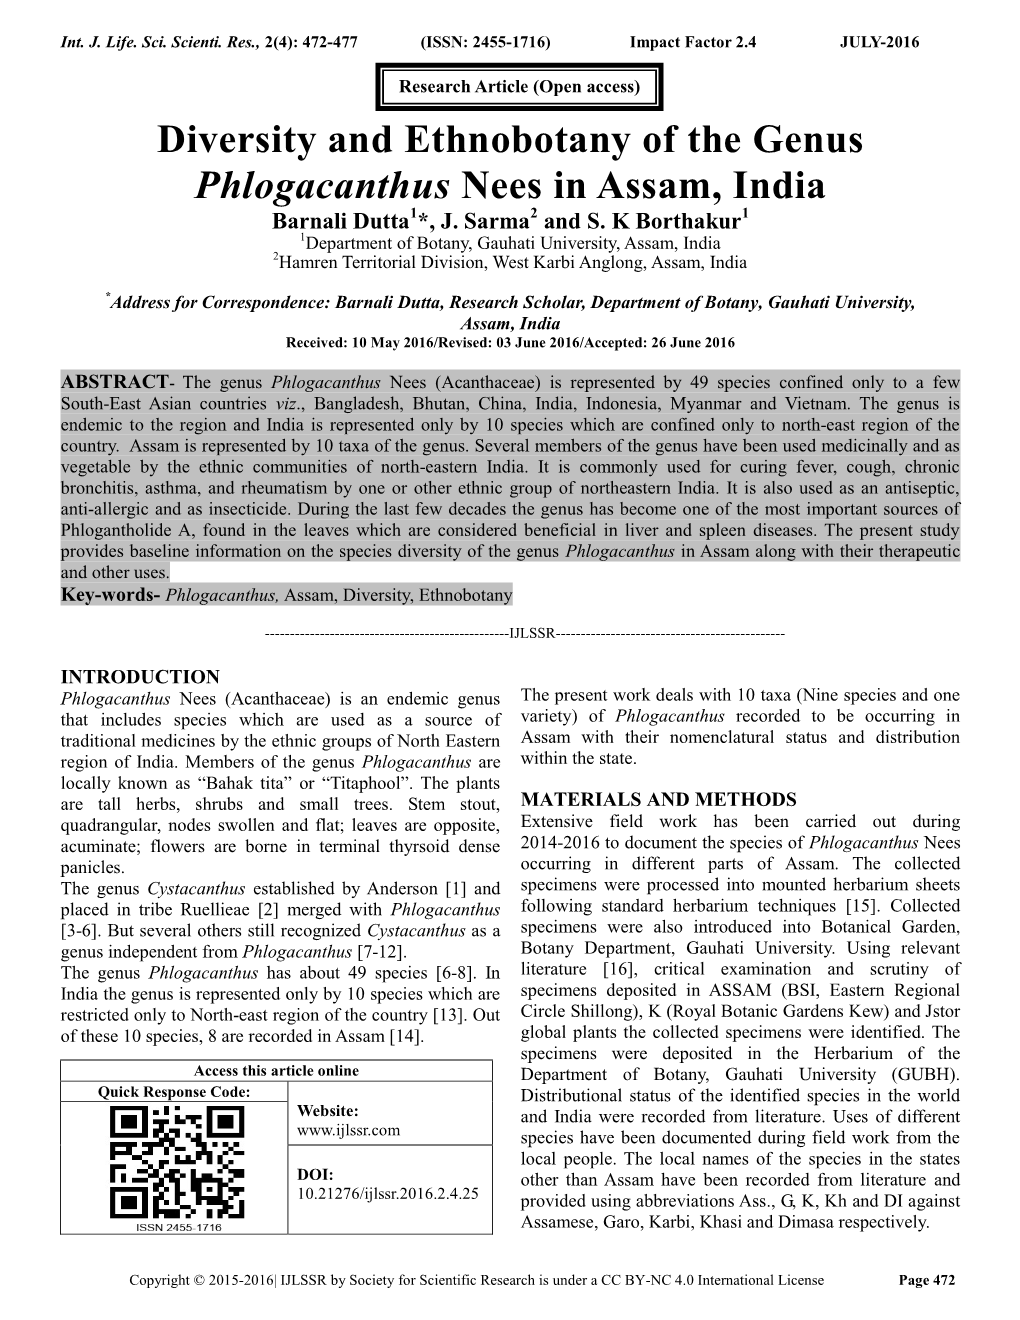 Diversity and Ethnobotany of the Genus Phlogacanthus Nees in Assam, India Barnali Dutta1*, J